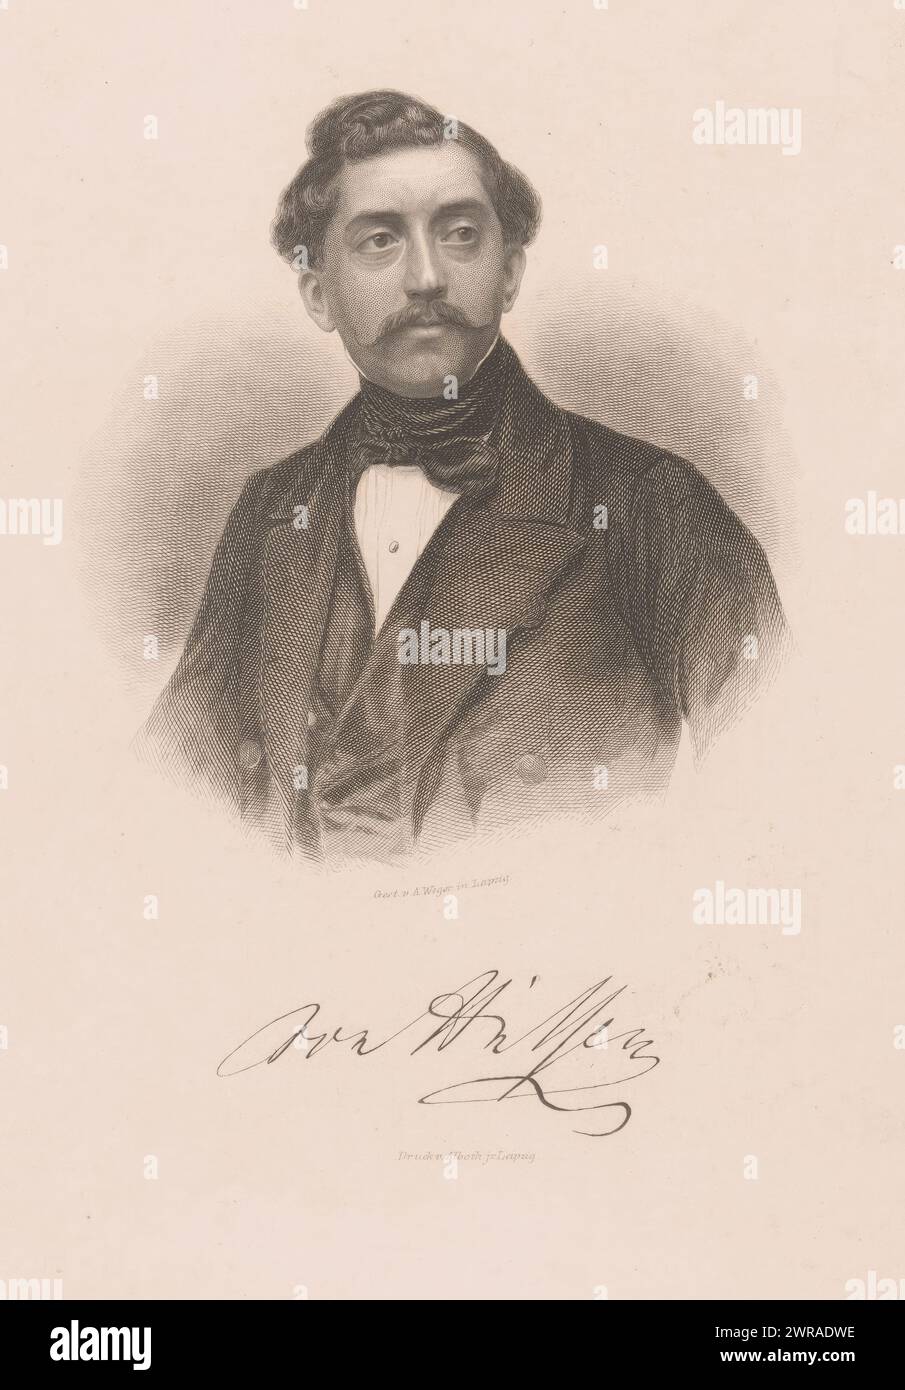 Portrait of Botho von Hülsen, print maker: August Weger, printer: Alexander Alboth, Leipzig, 1849 - 1892, paper, steel engraving, height 210 mm × width 163 mm, print Stock Photo